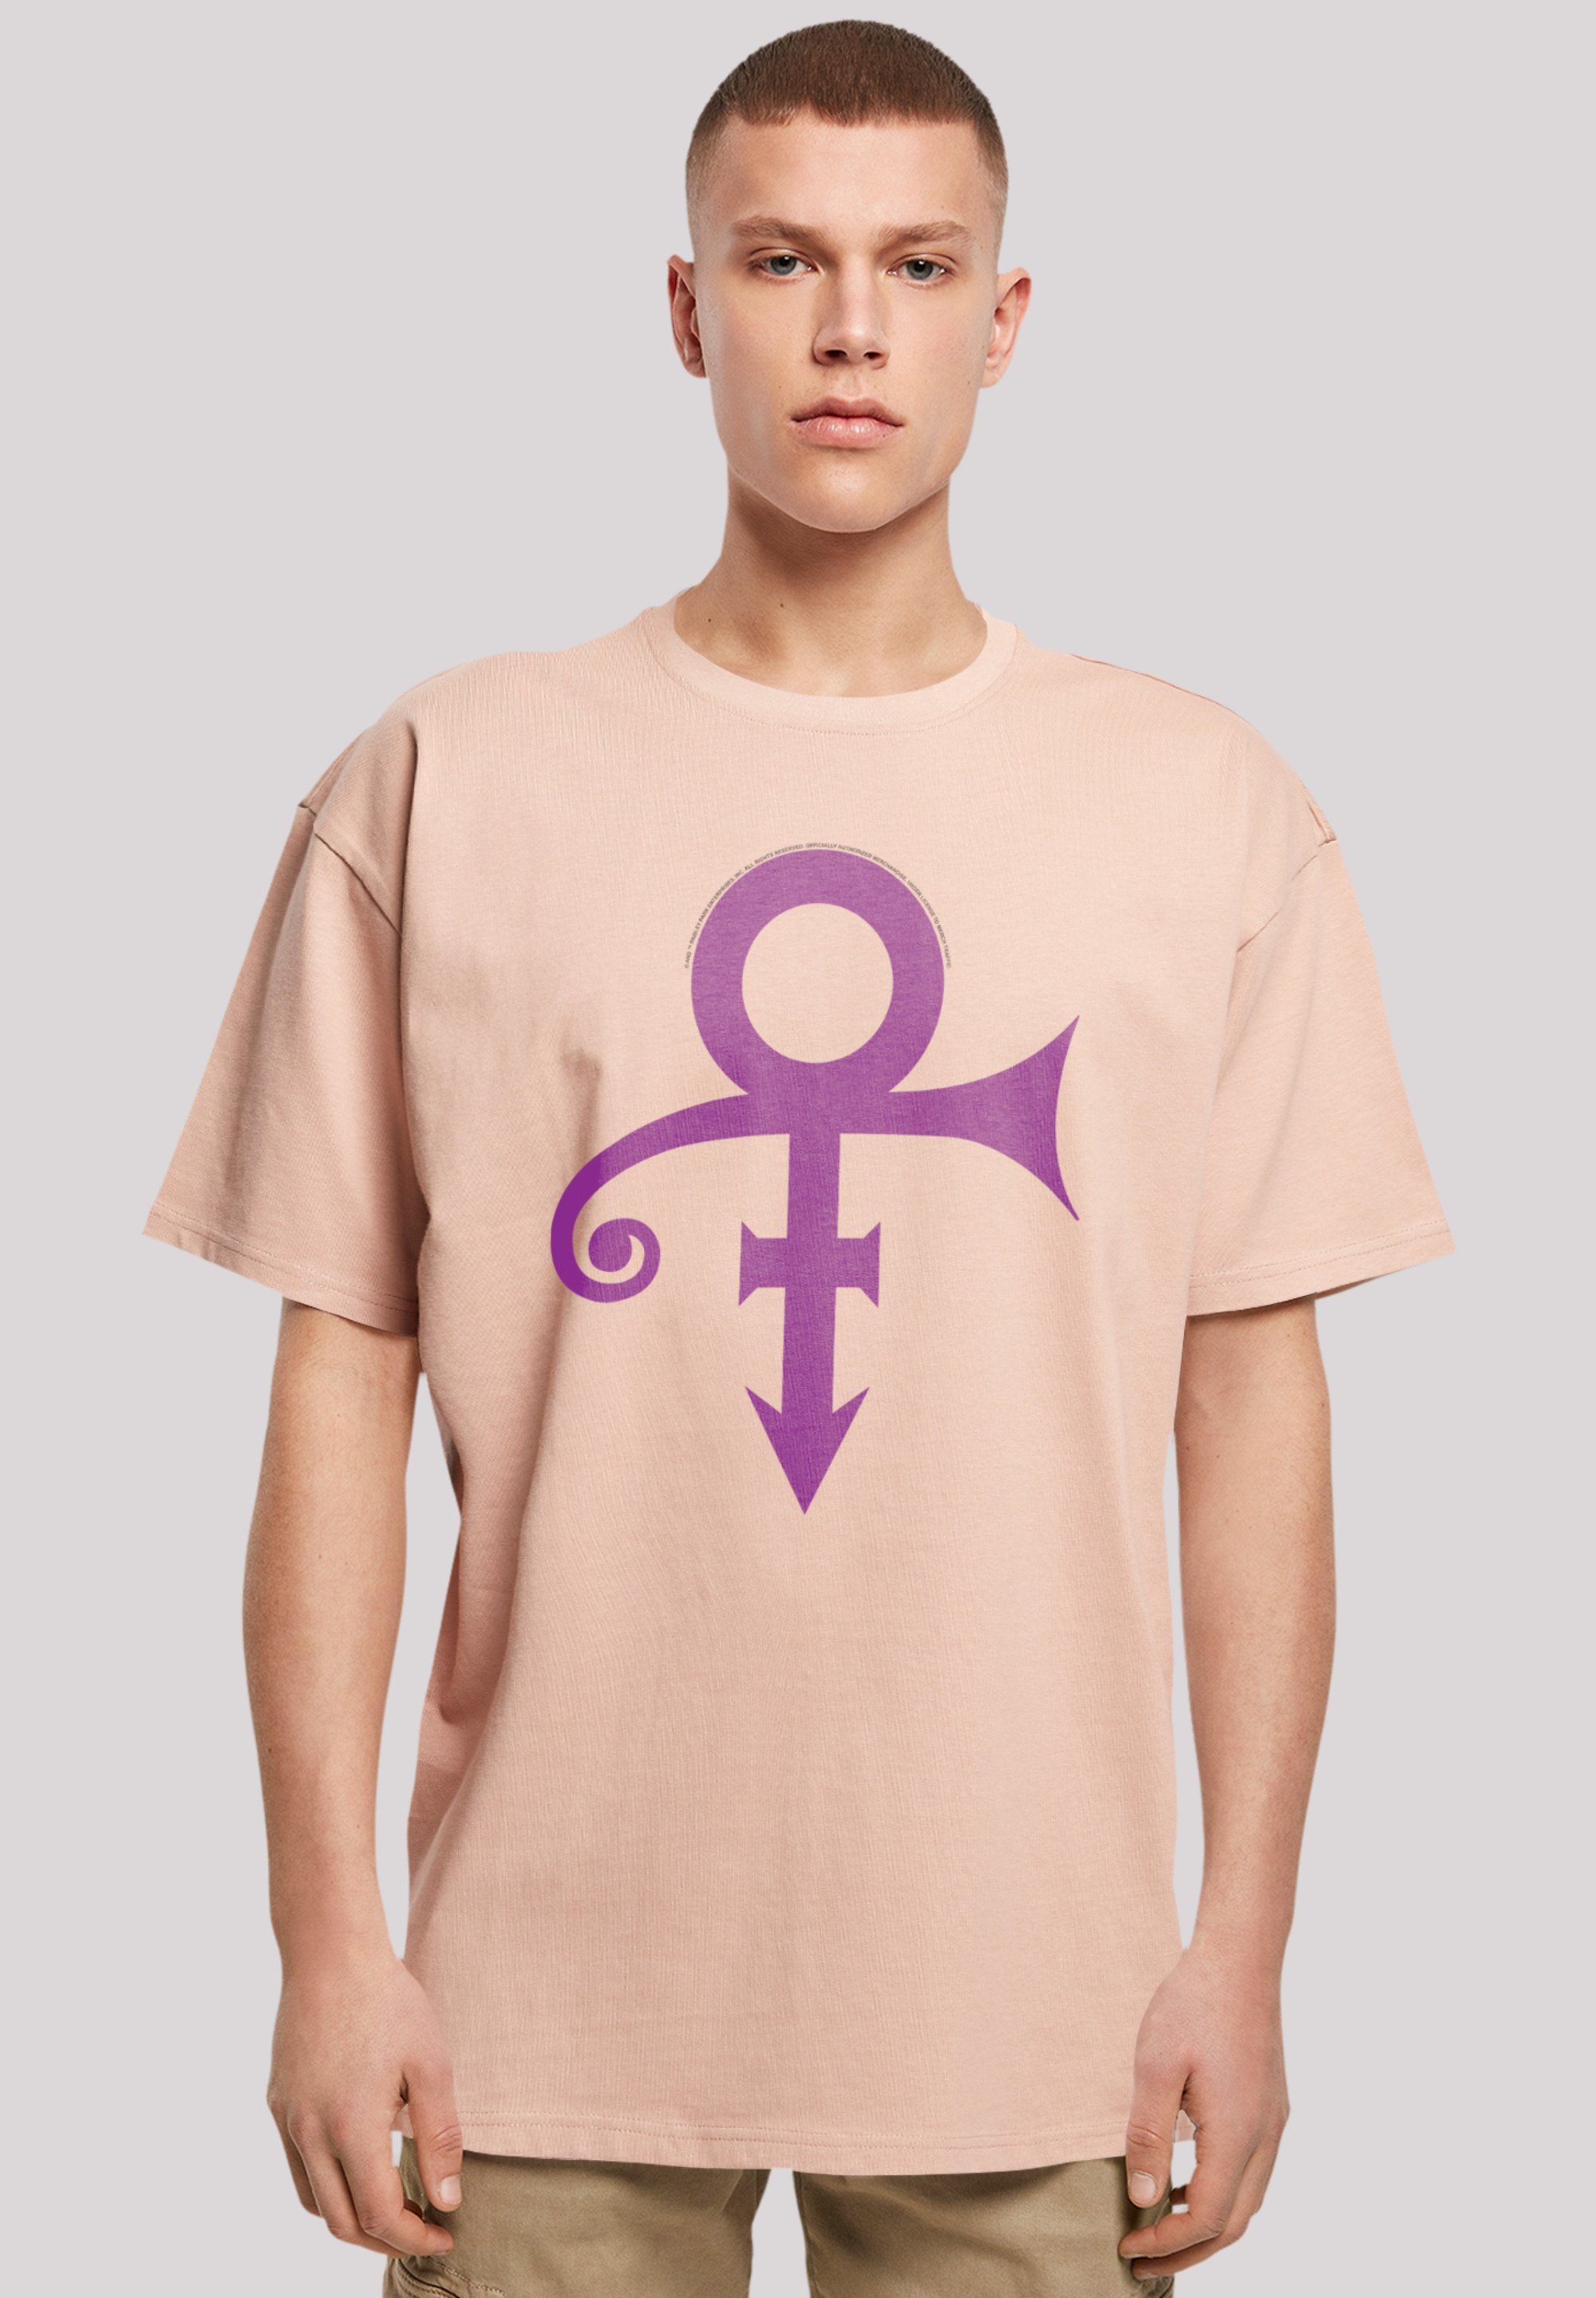 F4NT4STIC T-Shirt Prince Musik Album Logo Premium Qualität, Rock-Musik, Band amber